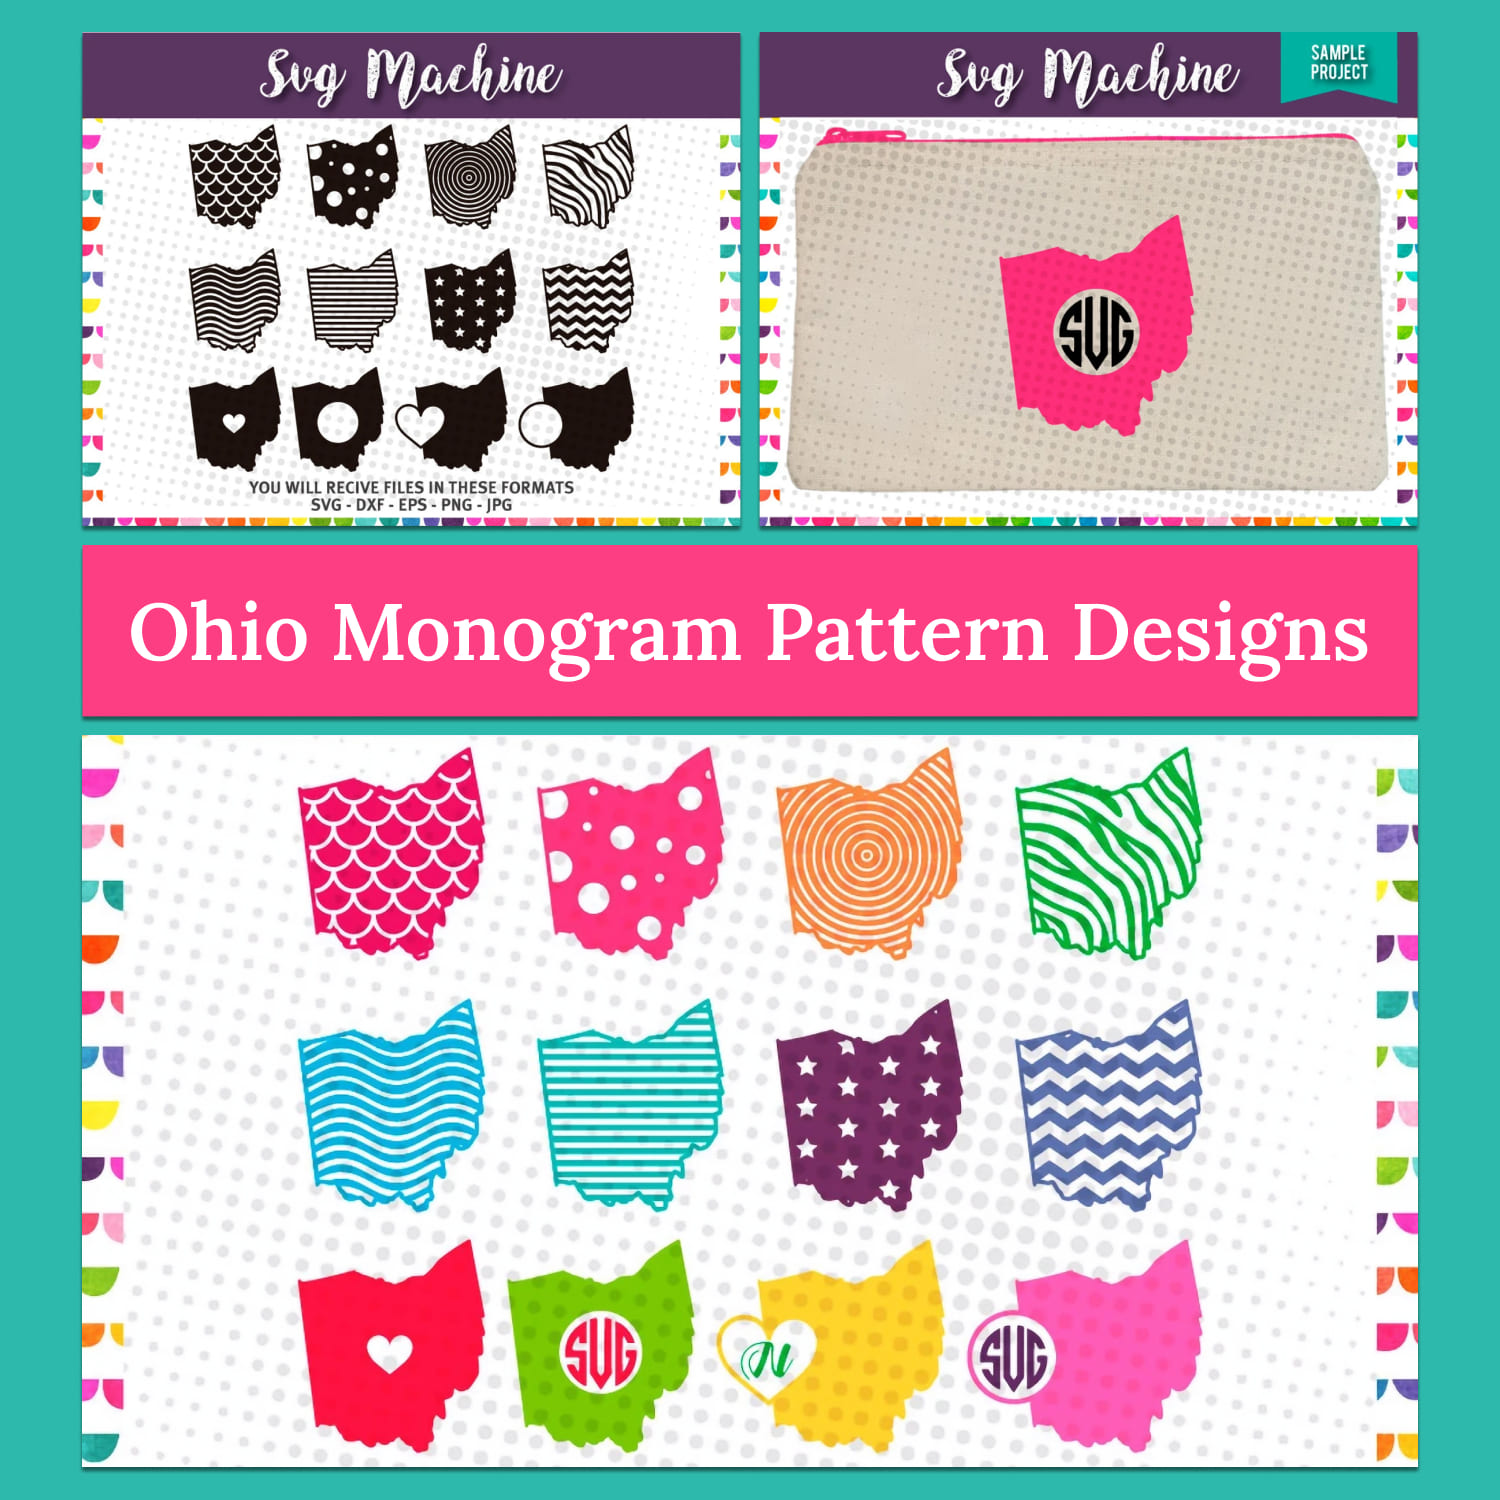 Ohio monogram pattern designs, Ohio State SVG cover.